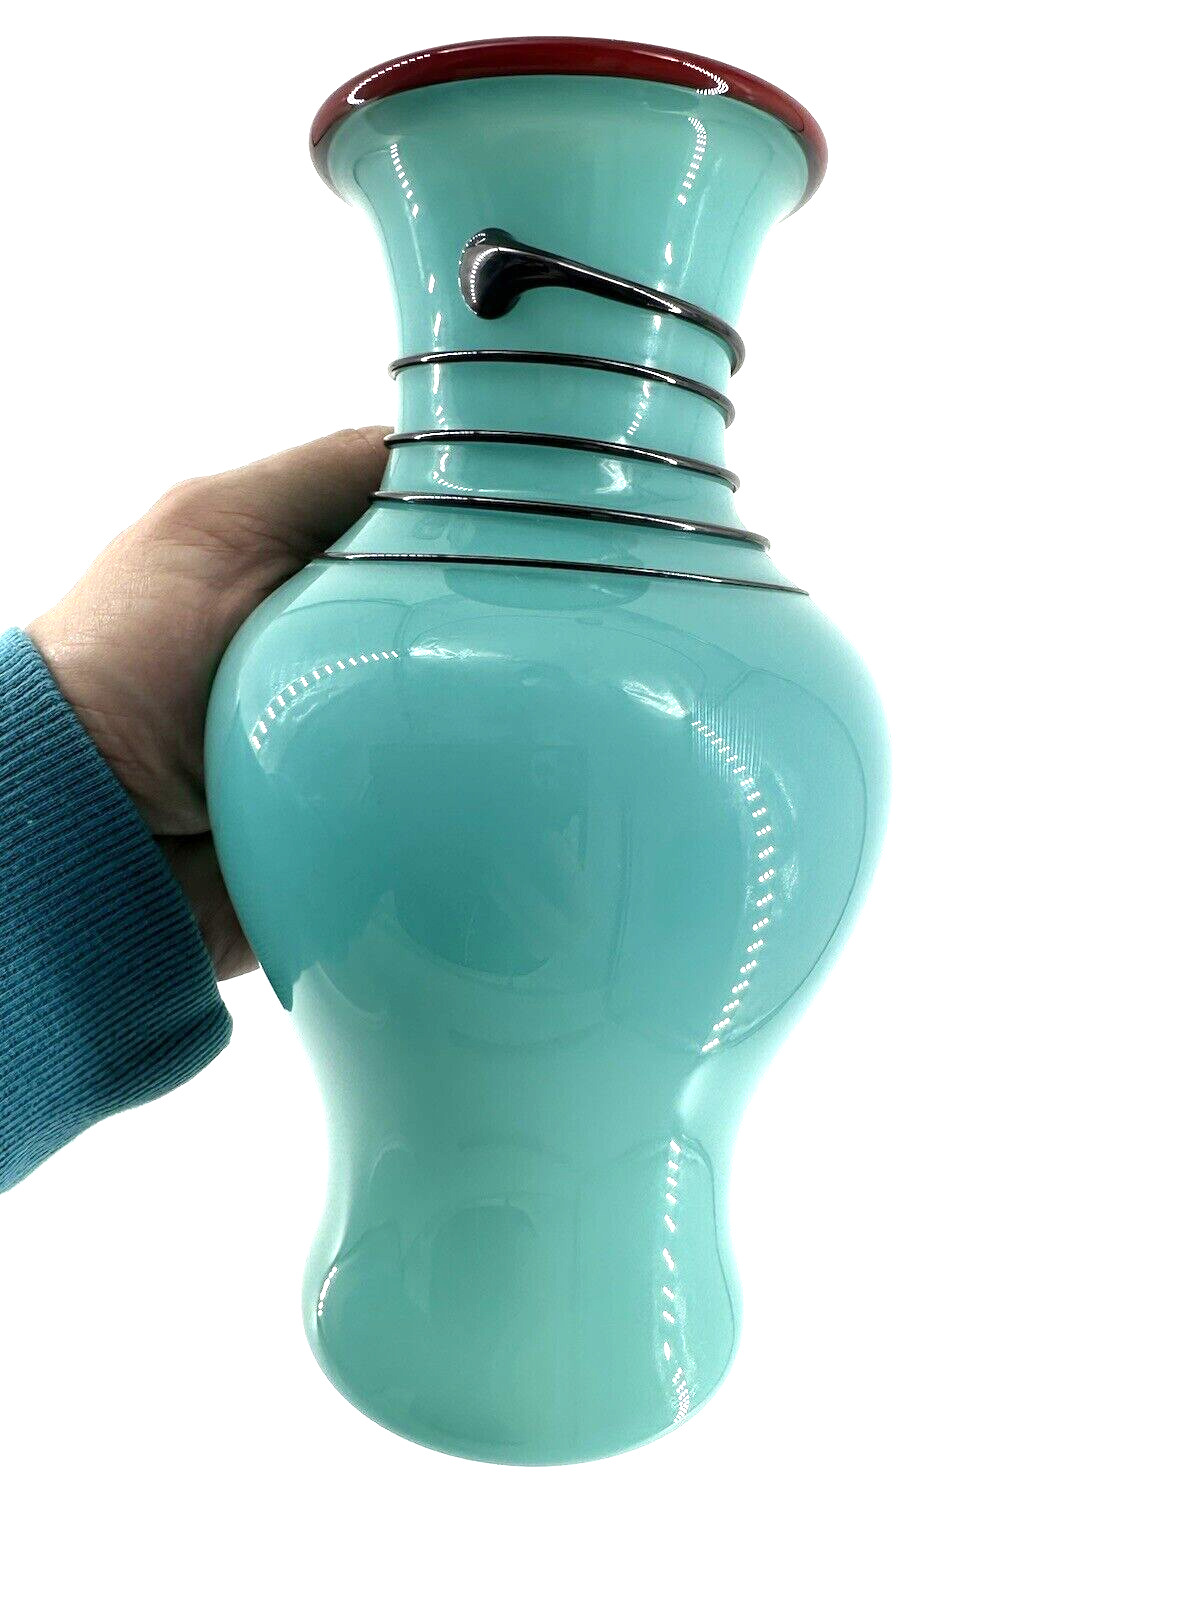 XRARE Thomas Maras 2009 ARTIST SIGNED Studio Art Glass Vase HAND BLOWN GLASS 8